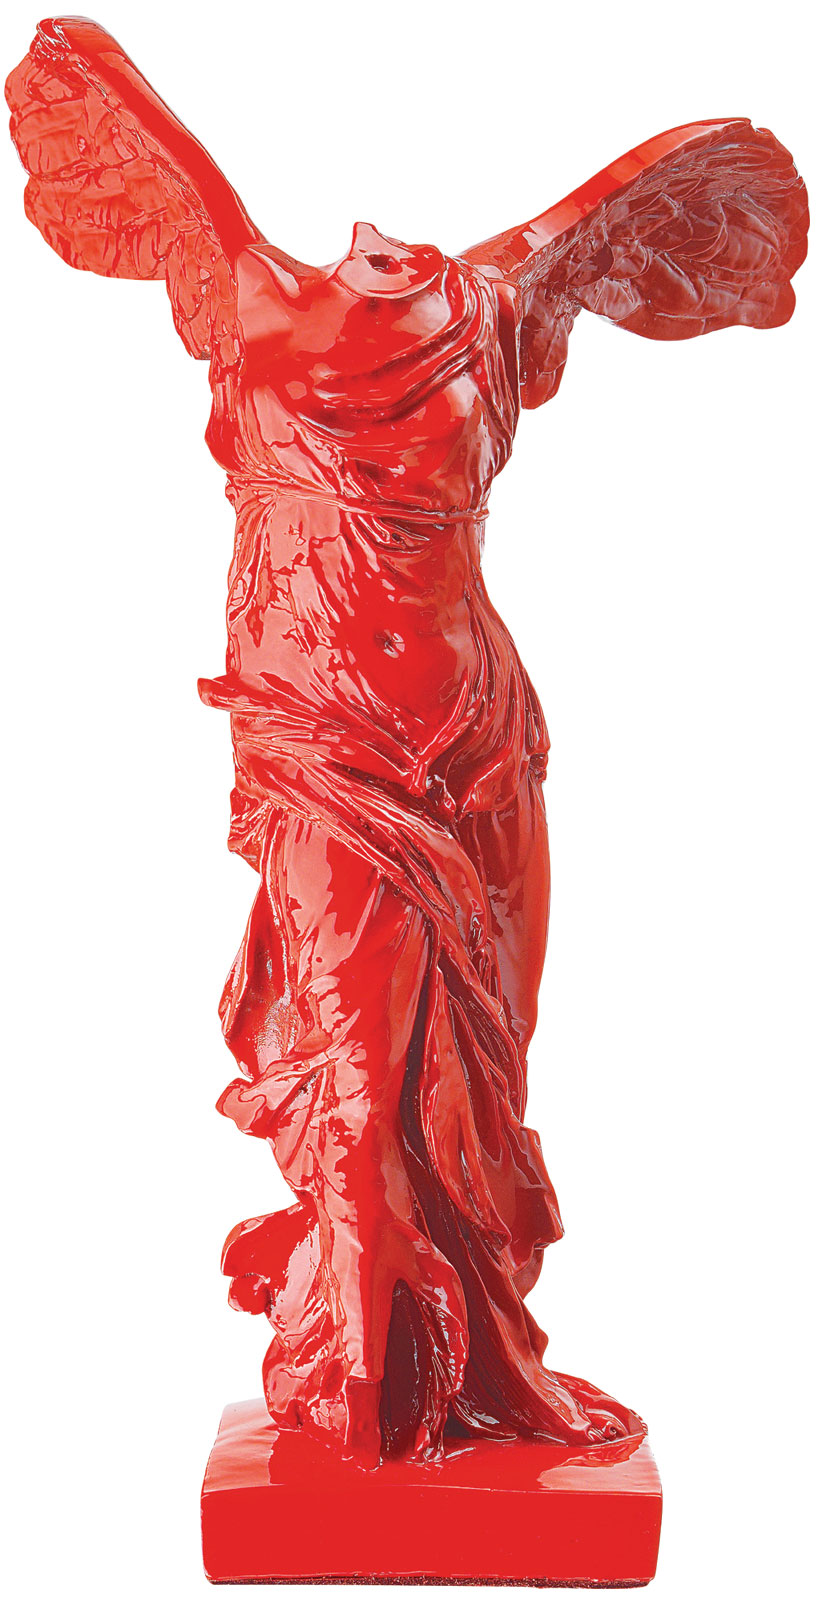 Skulptur 'Nike von Samothrake', Kunstguss rot